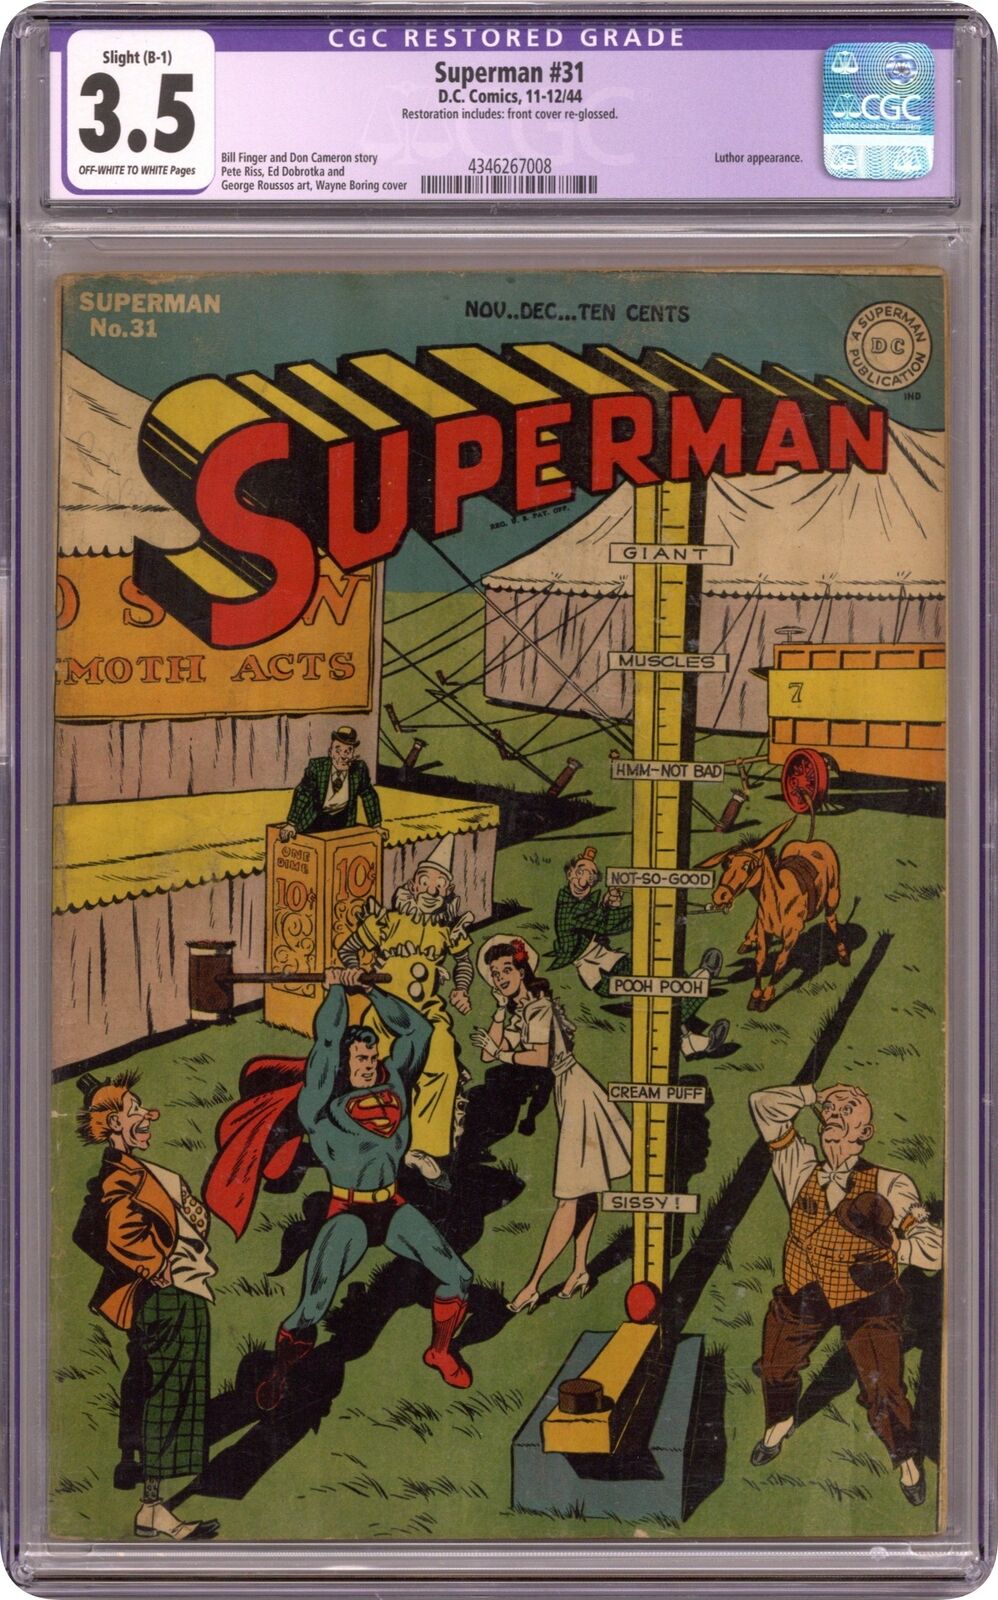 Superman #31 CGC 3.5 RESTORED 1944 4346267008